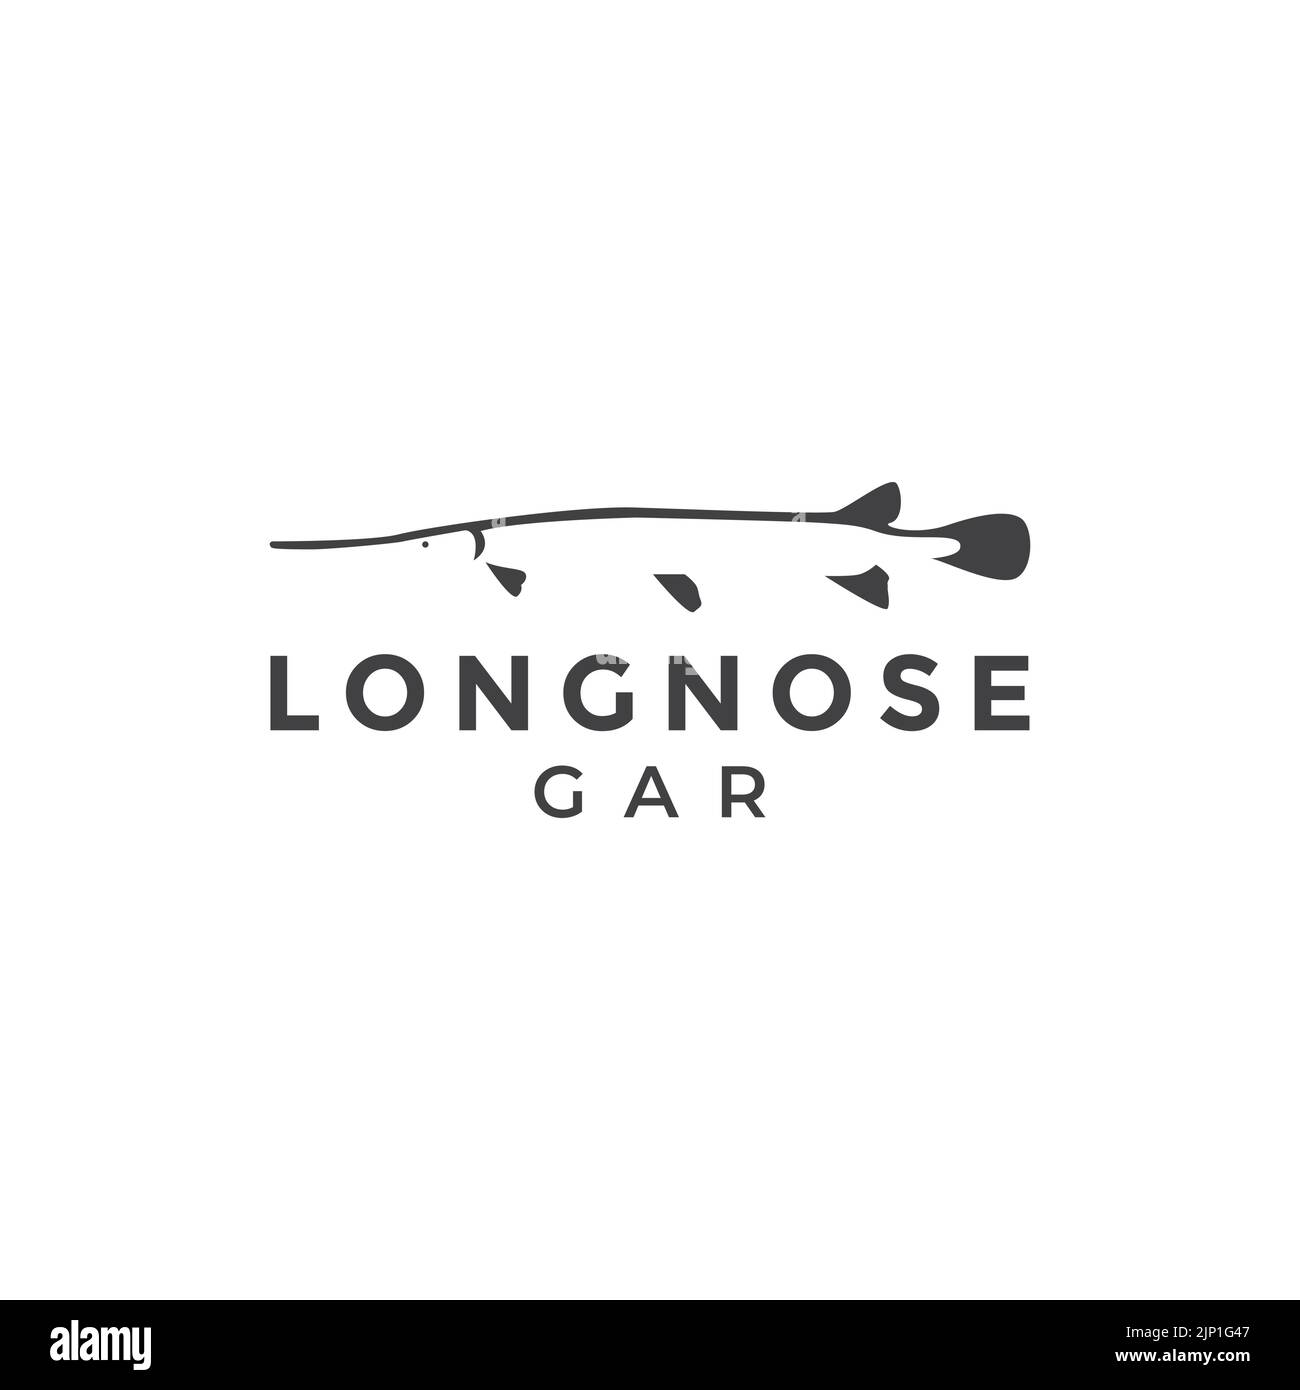 fish longnose gar minimal logo design Stock Vector